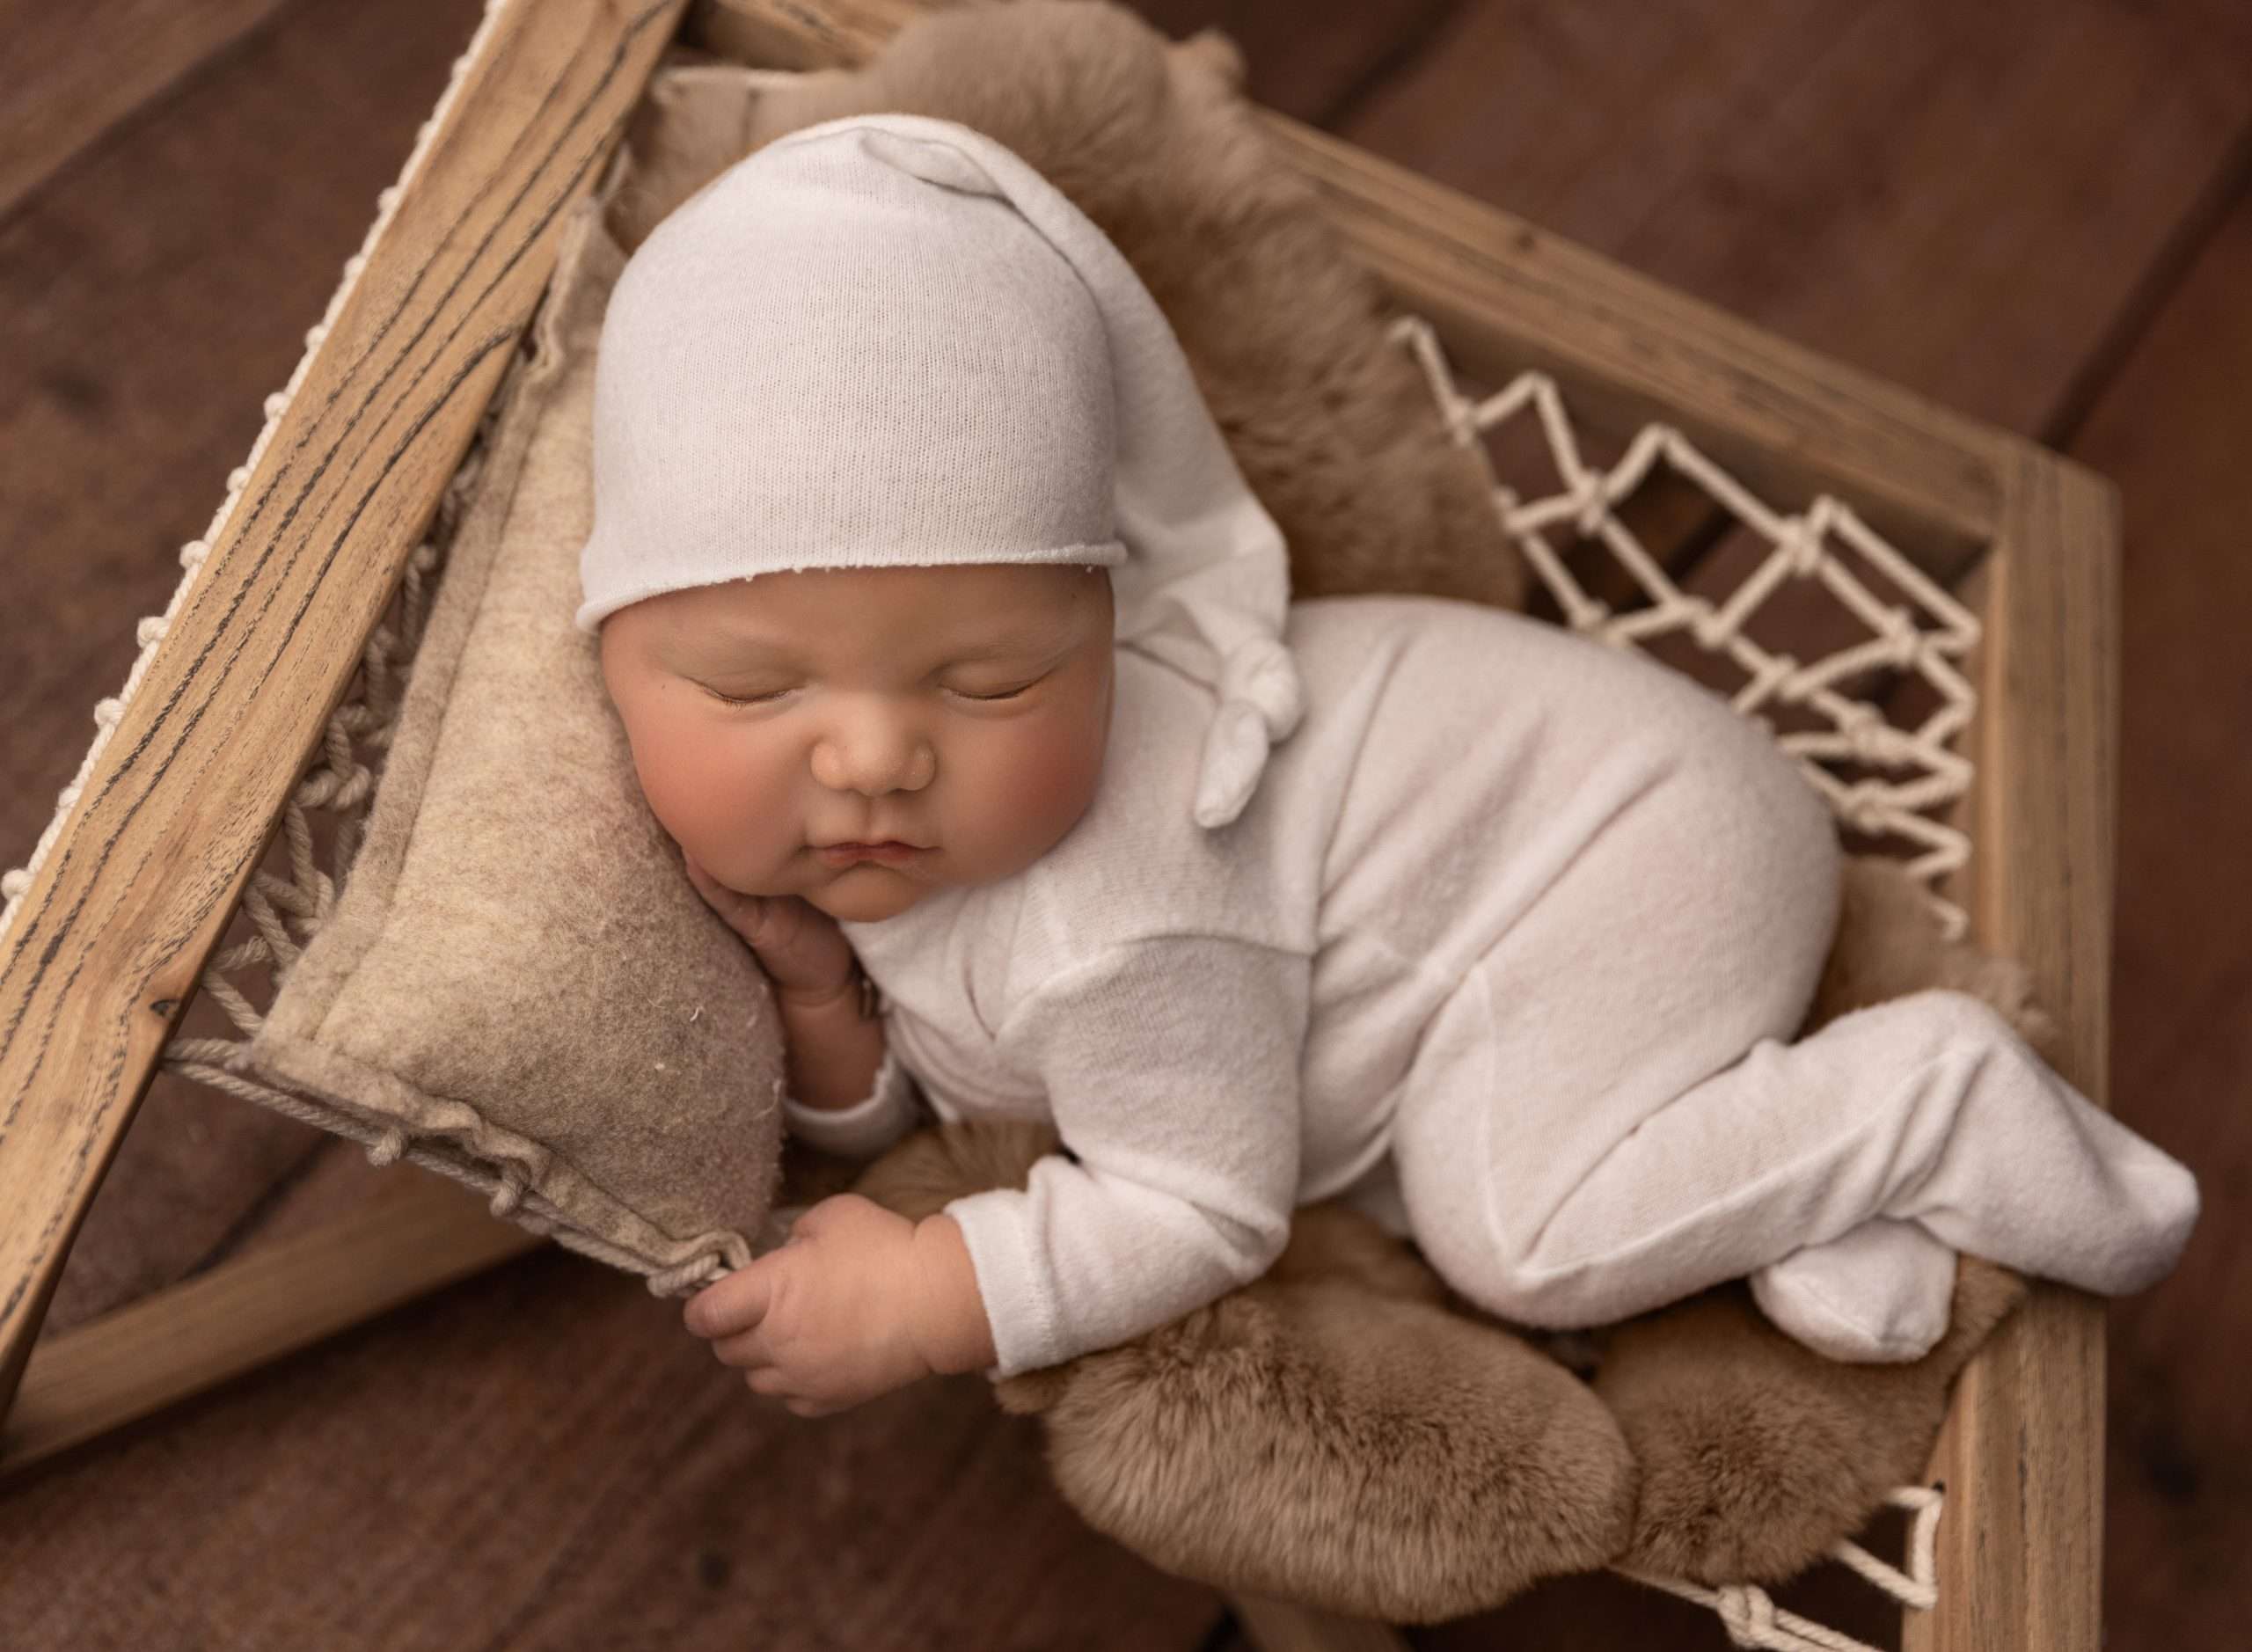 newborn photography Sunbury OH, Lewis Center OH baby photographer, newborn photography packages